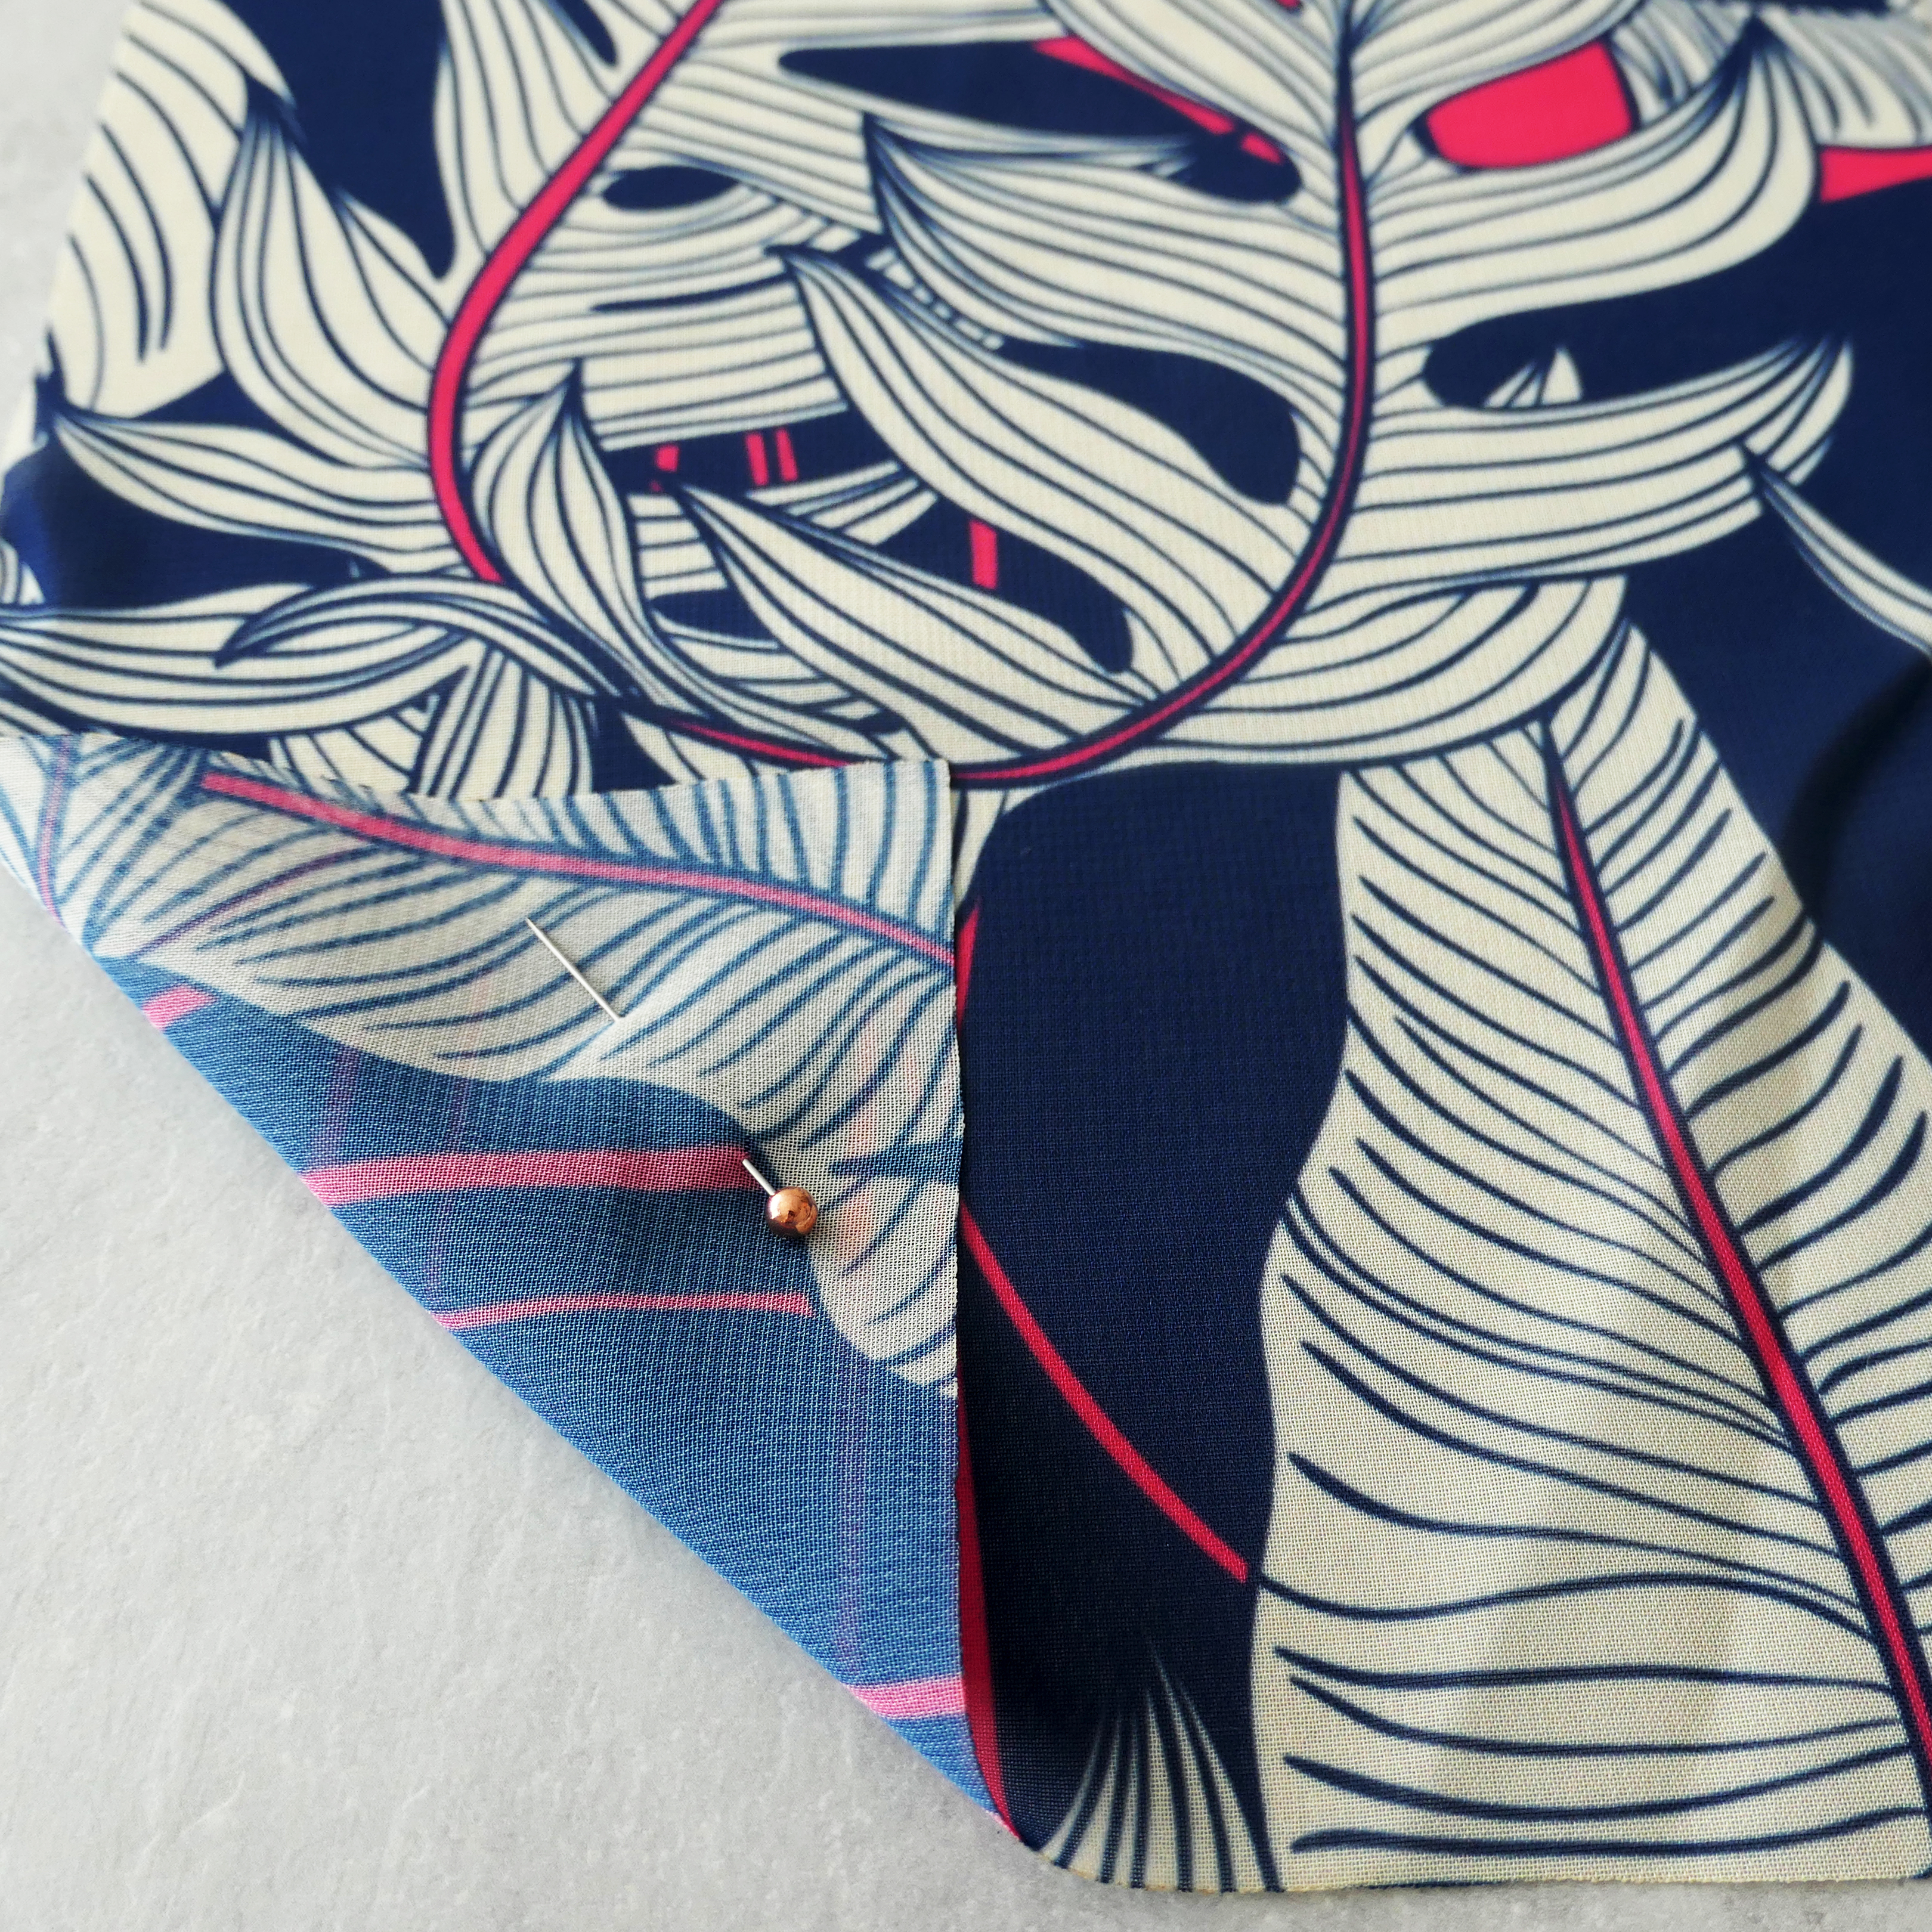 Picture of custom printed Polychiffon fabric